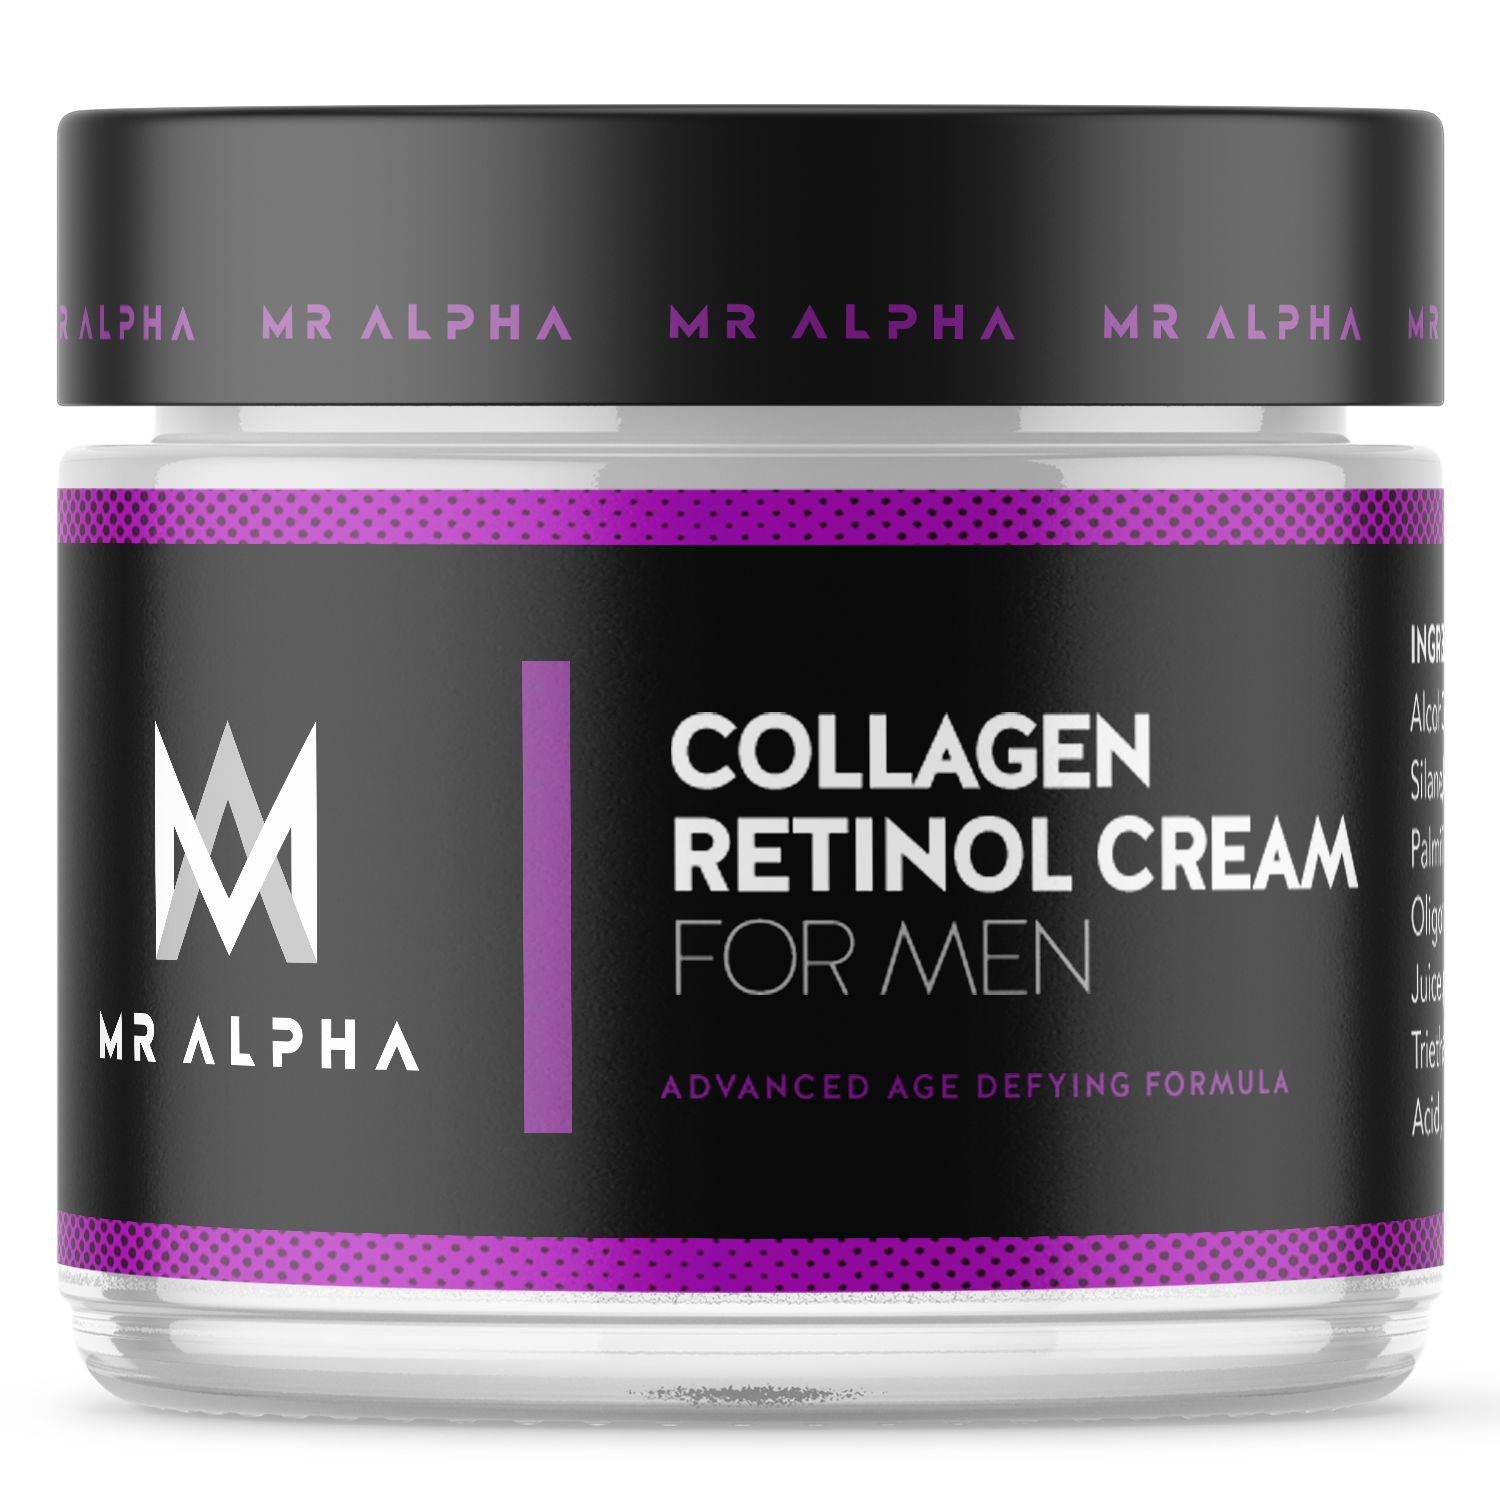 MR ALPHA Collagen Retinol Face Cream Anti Aging Moisturizer for Men, 30ml - image 1 of 3